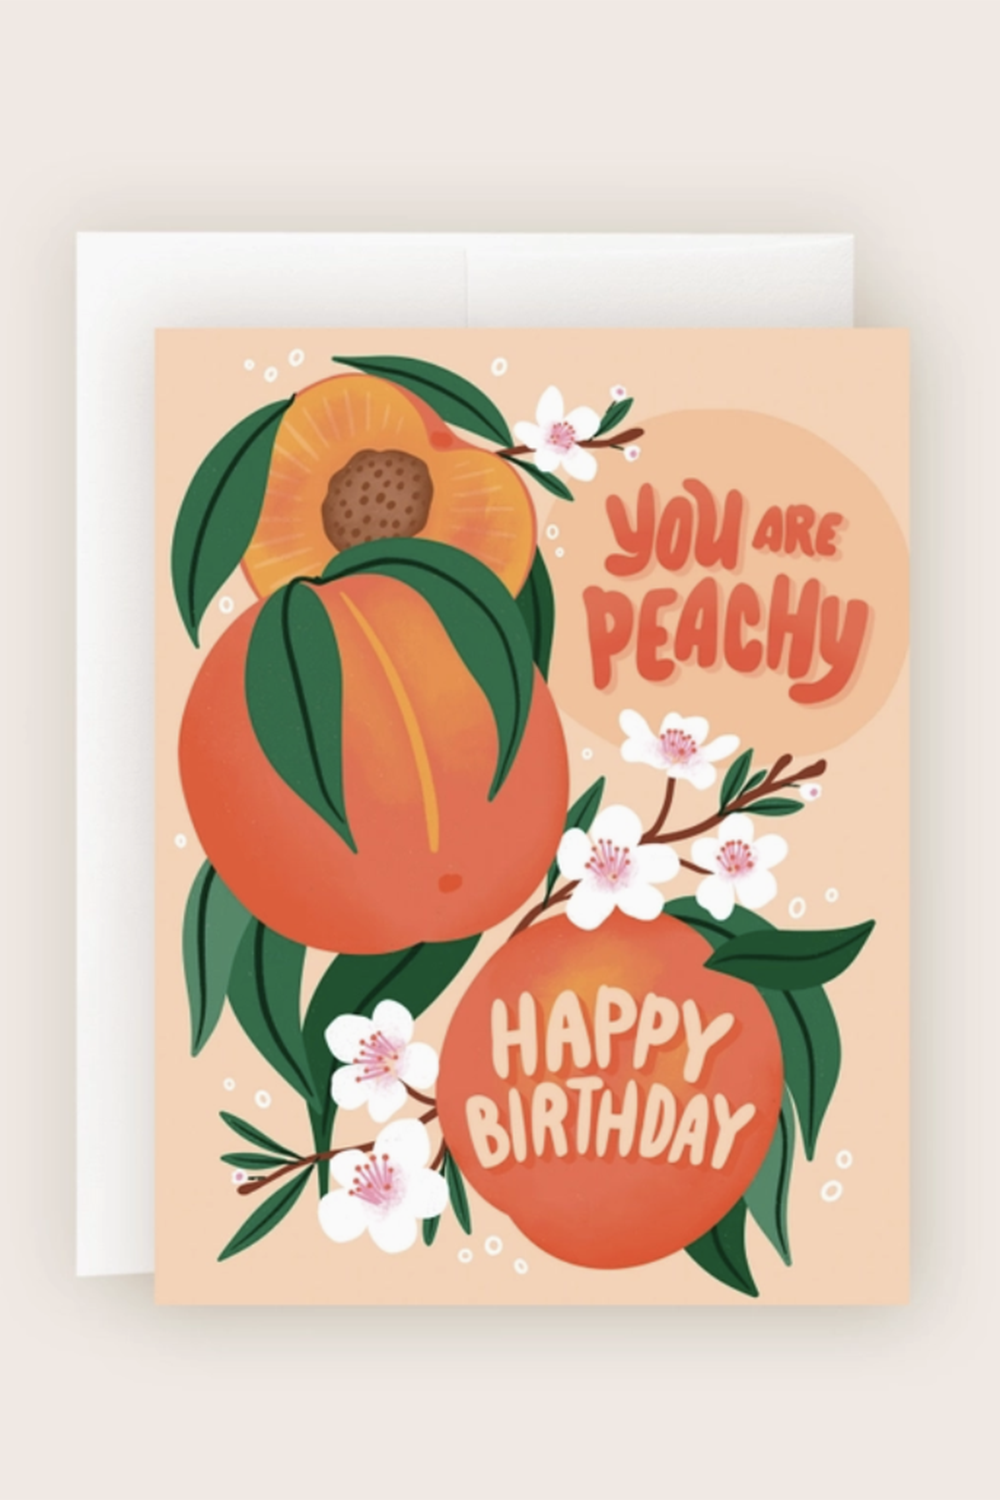 Pea Birthday Card - Peachy